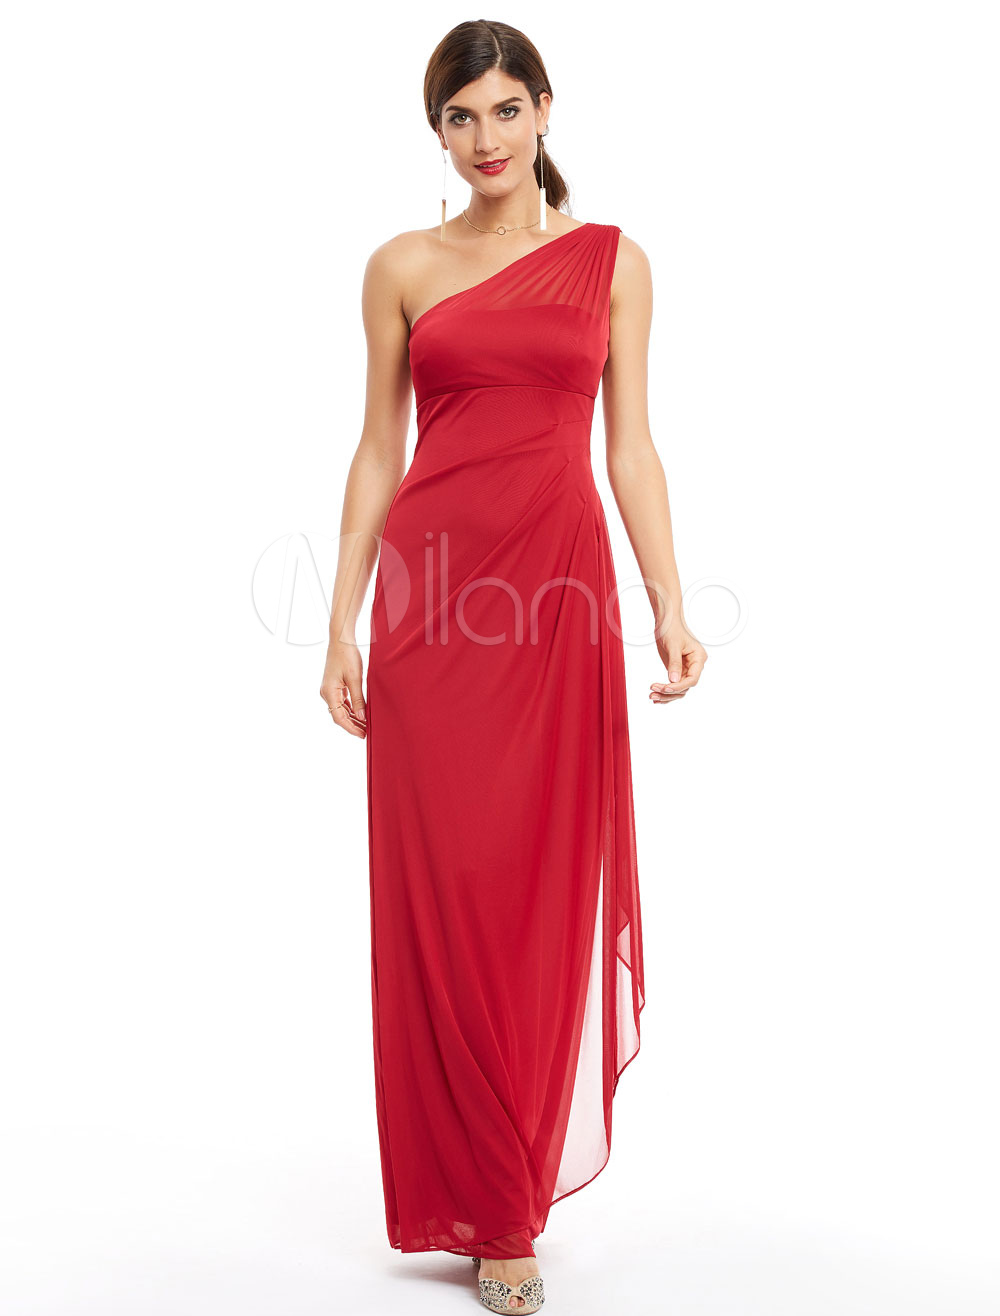 Burgundy Evening Dresses One Shoulder Long Prom Dress Ruched Floor Length Formal Dress (Wedding Cheap Party Dress) photo